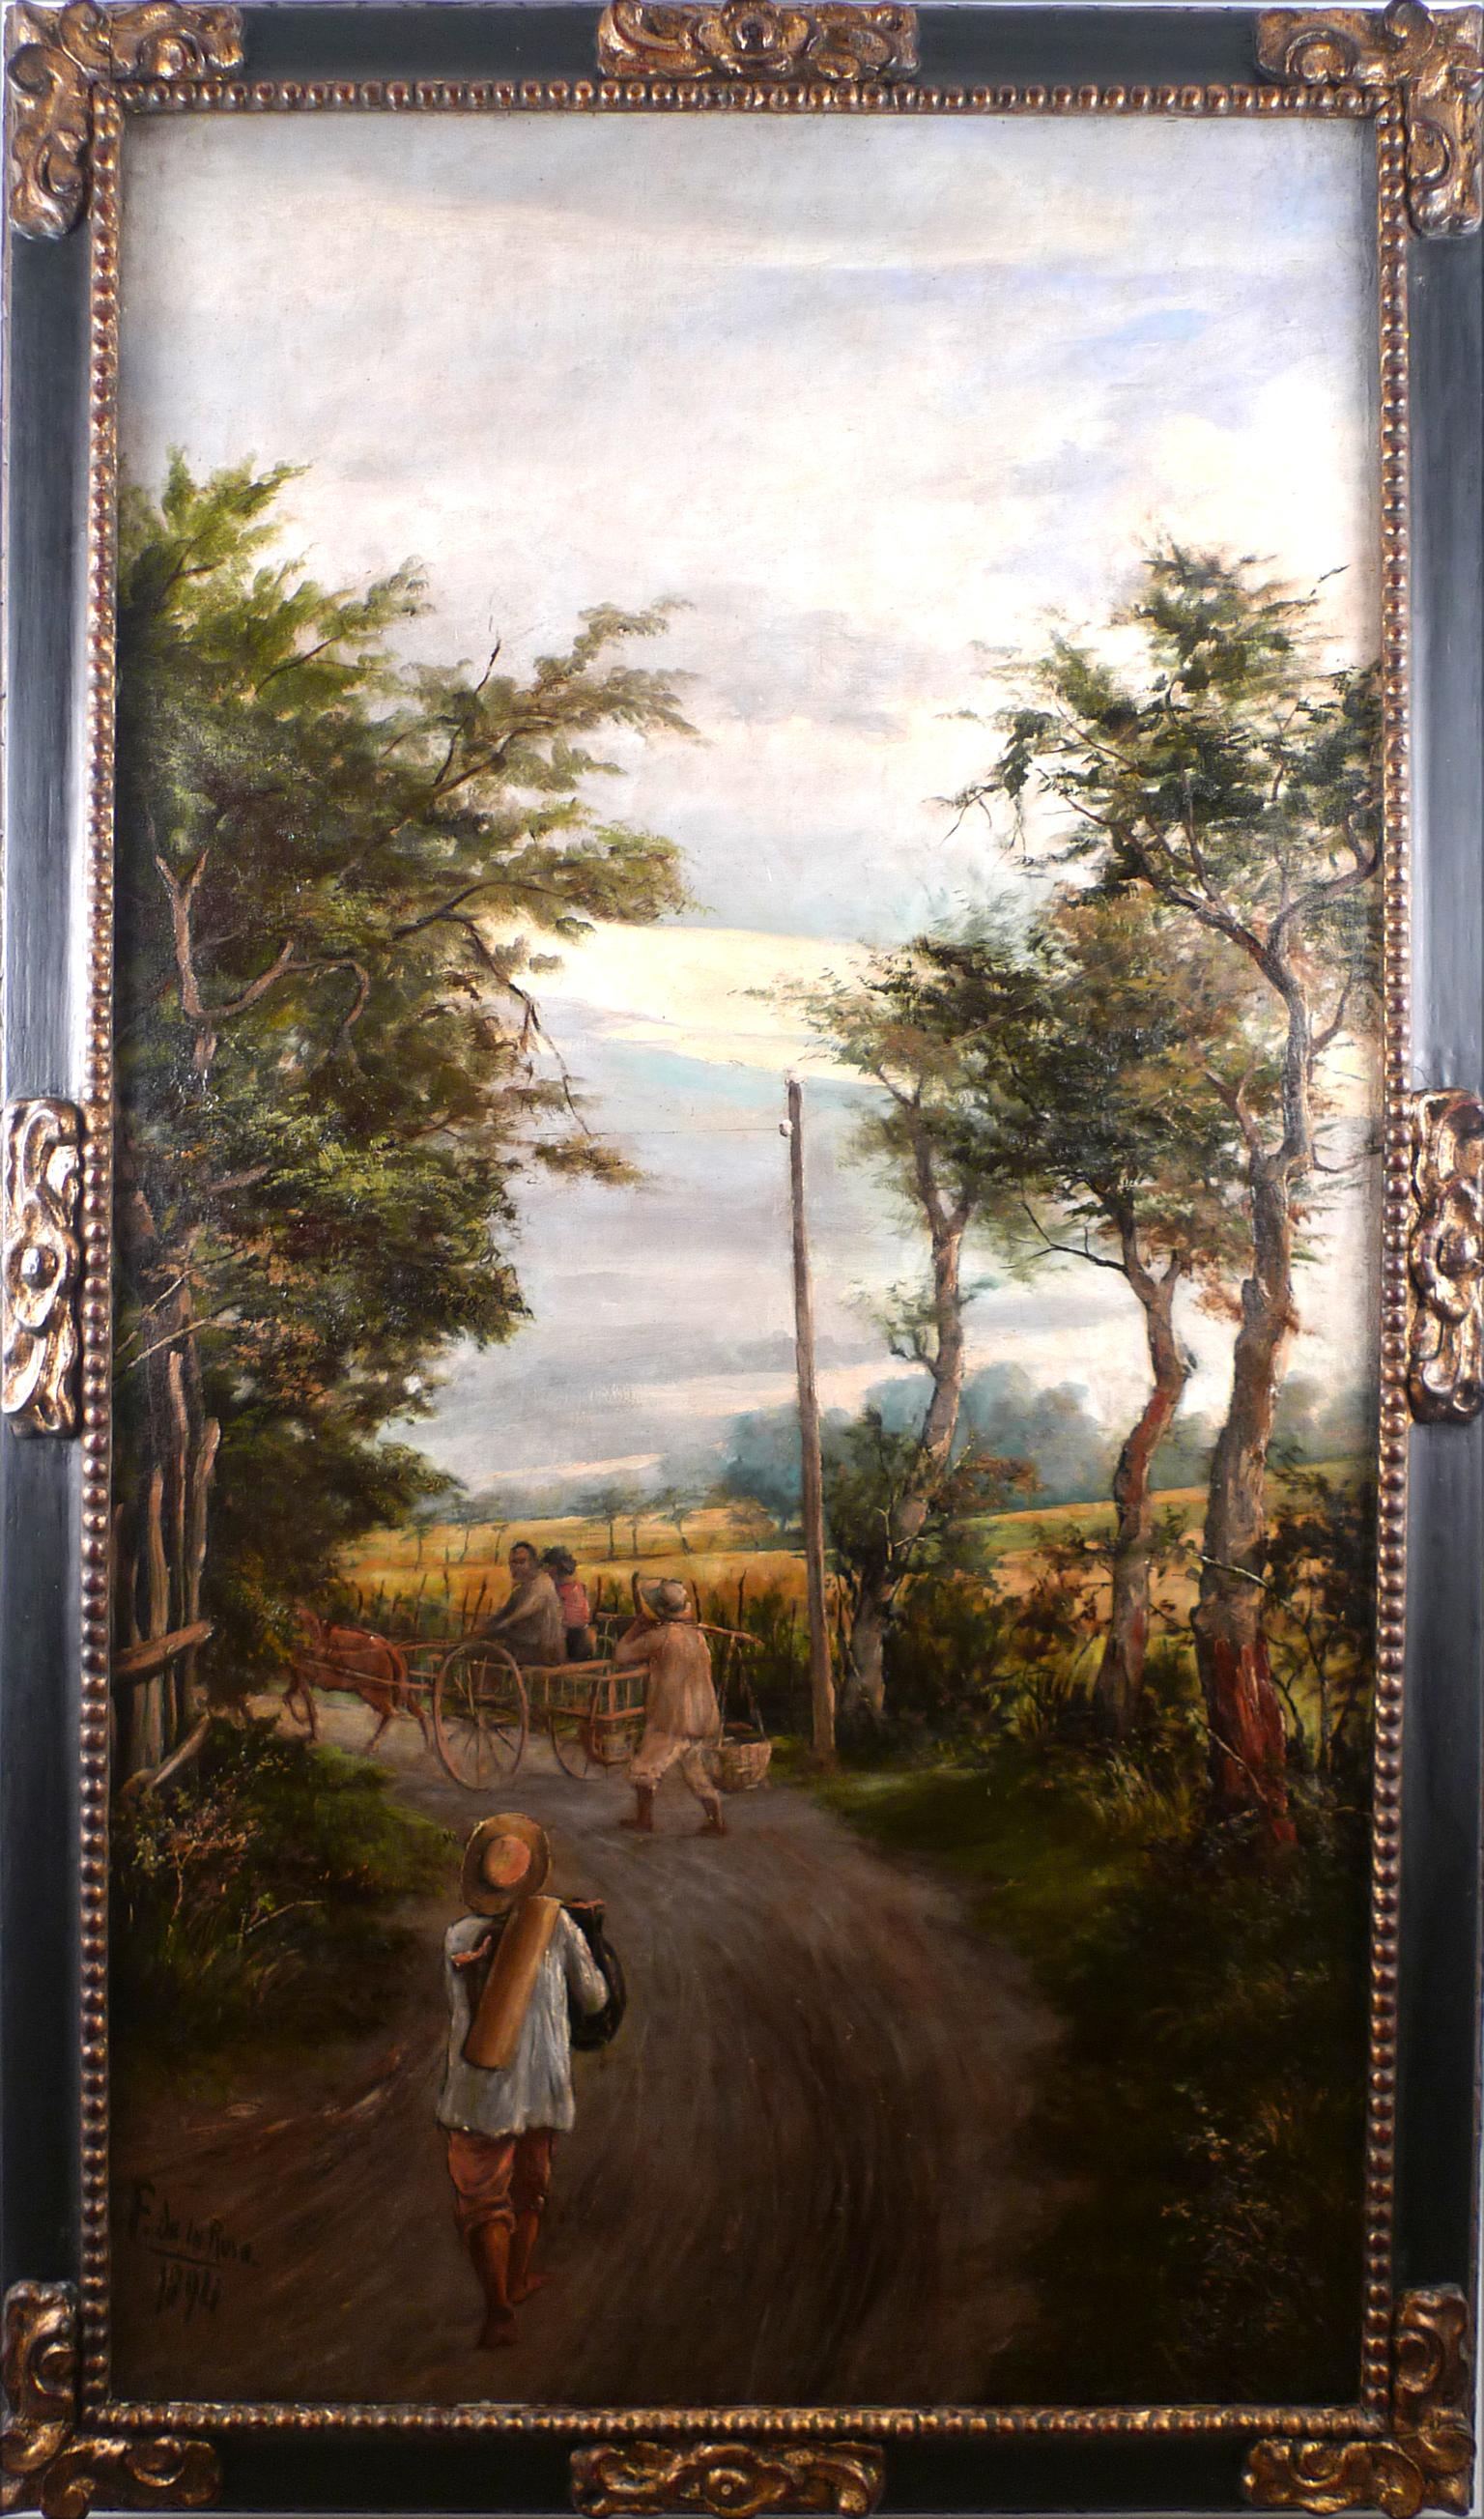 Fabian de la Rosa Landscape Painting - "Filipino Farm Workers in Horse Carriage" 19th C. Oil on Canvas by F. de la Rosa